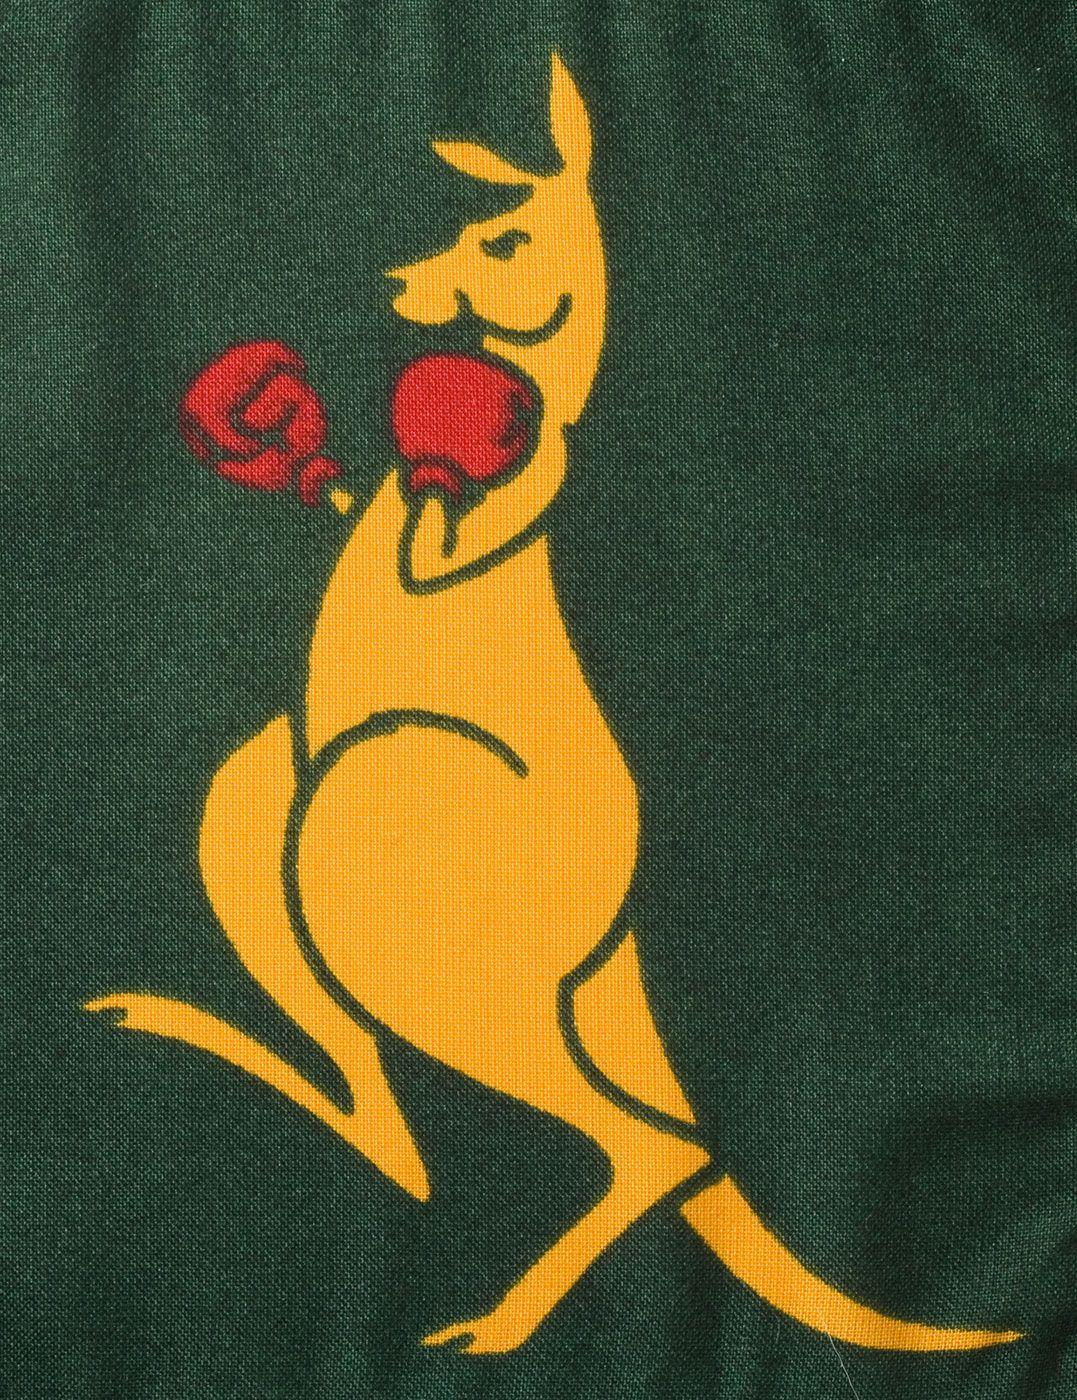 Boxing Kangaroo Logo - Kangaroo | National Museum of Australia